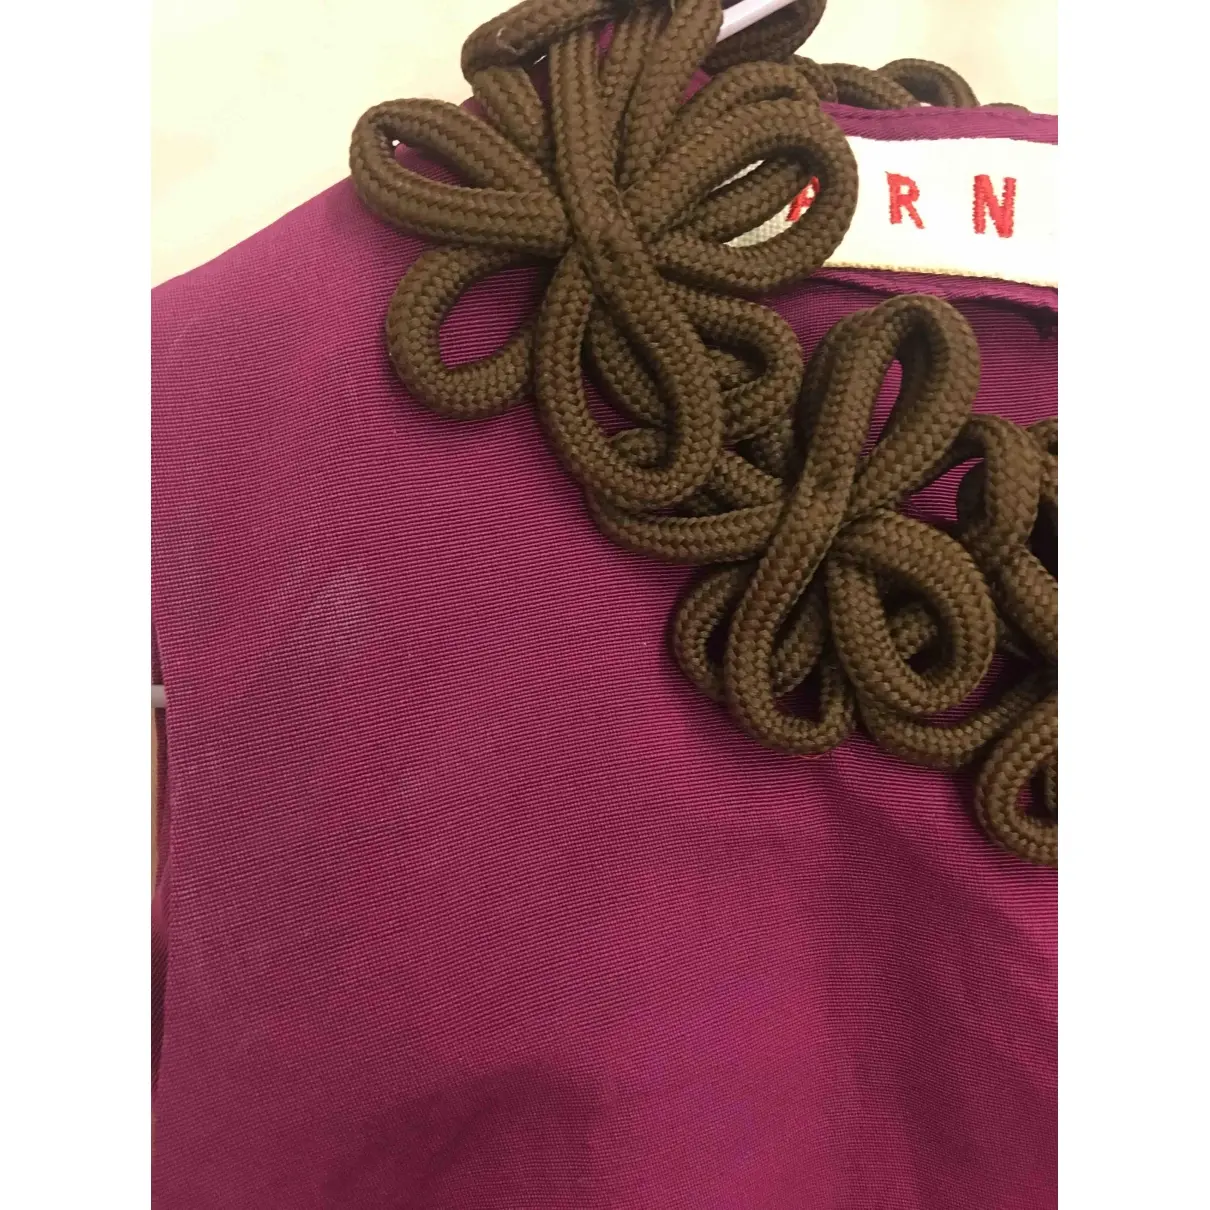 Buy Marni Wool blouse online